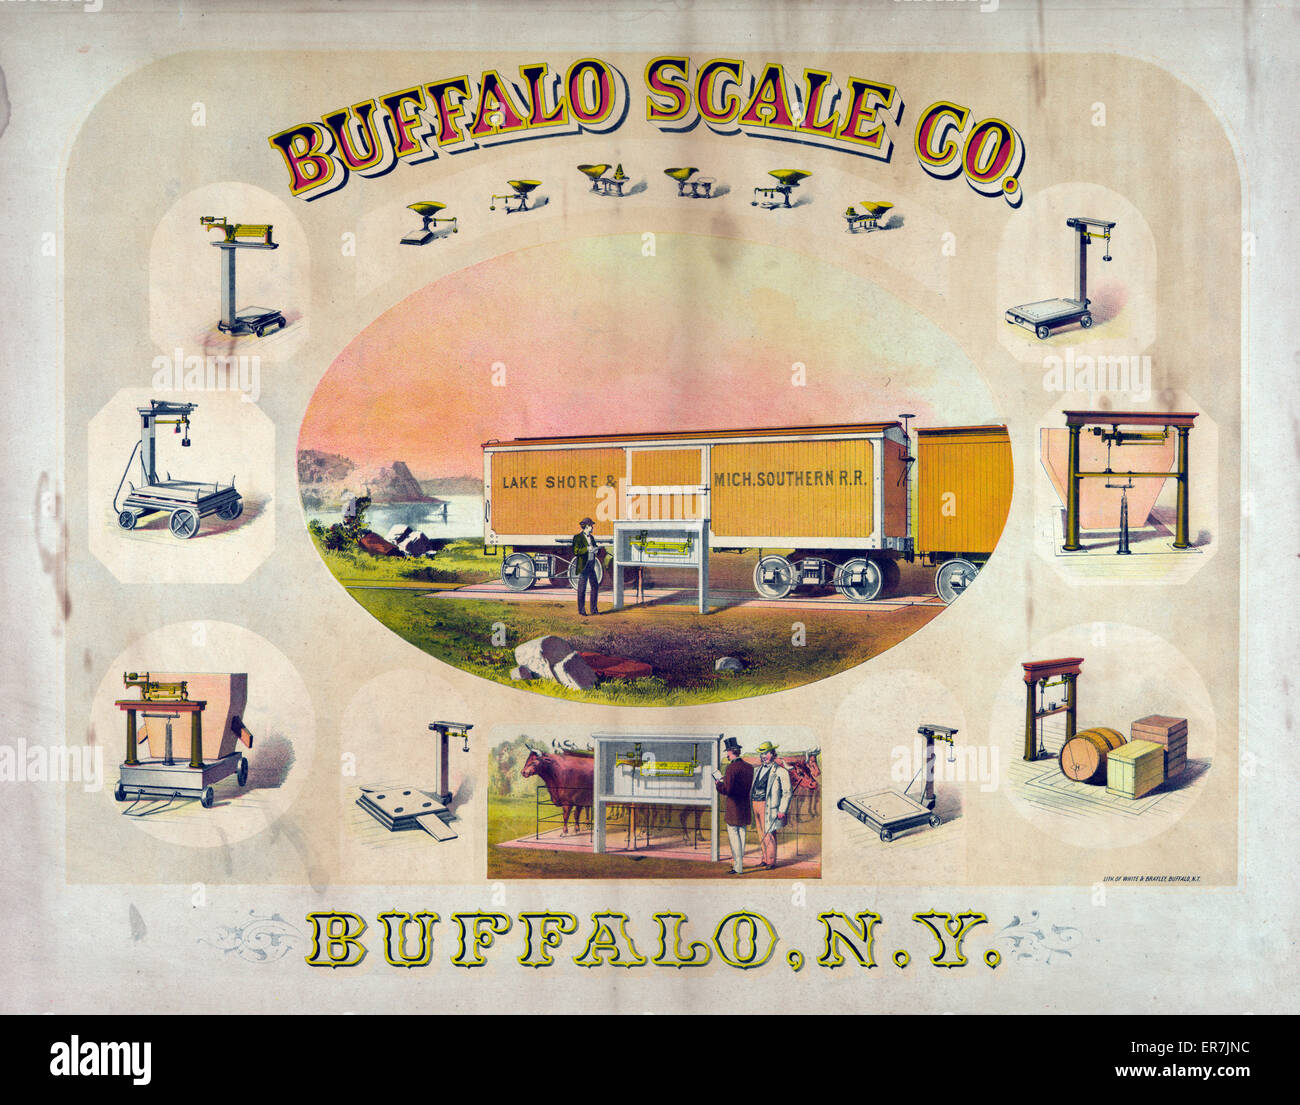 Buffalo scale co Stock Photo